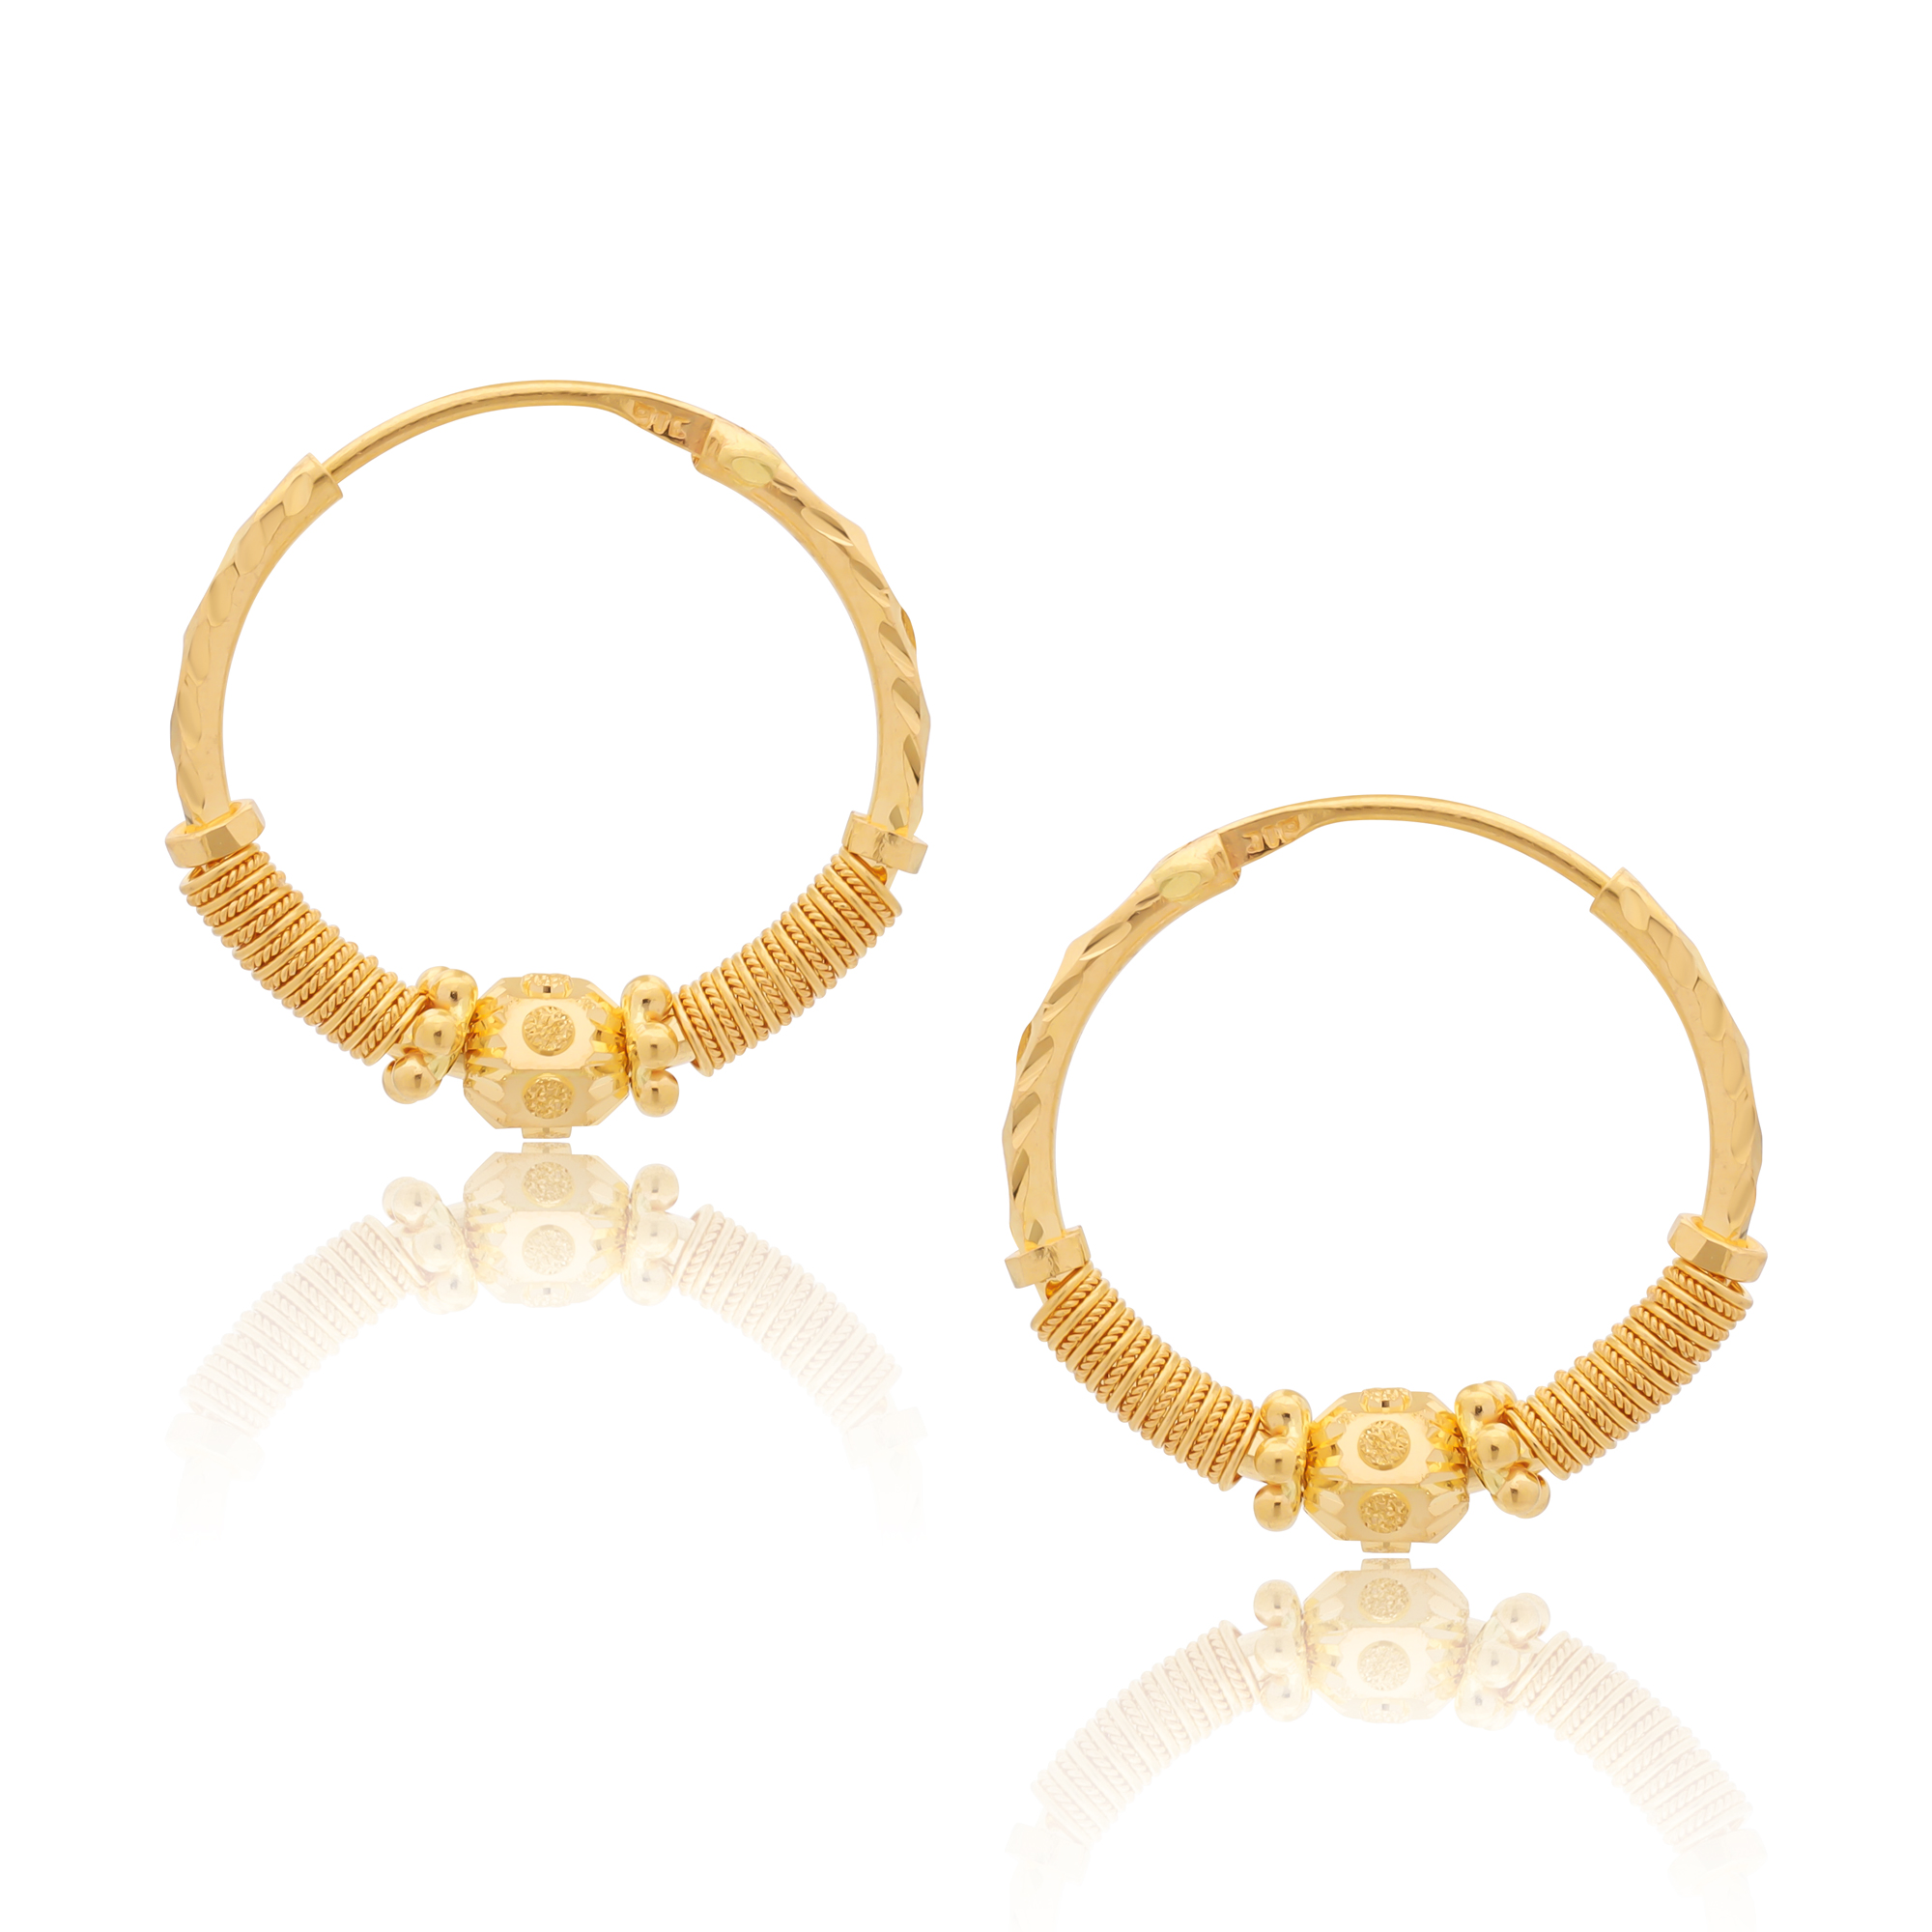 Baby Earrings | Fine gold jewelry, Kids gold jewelry, Gold jewelry gift